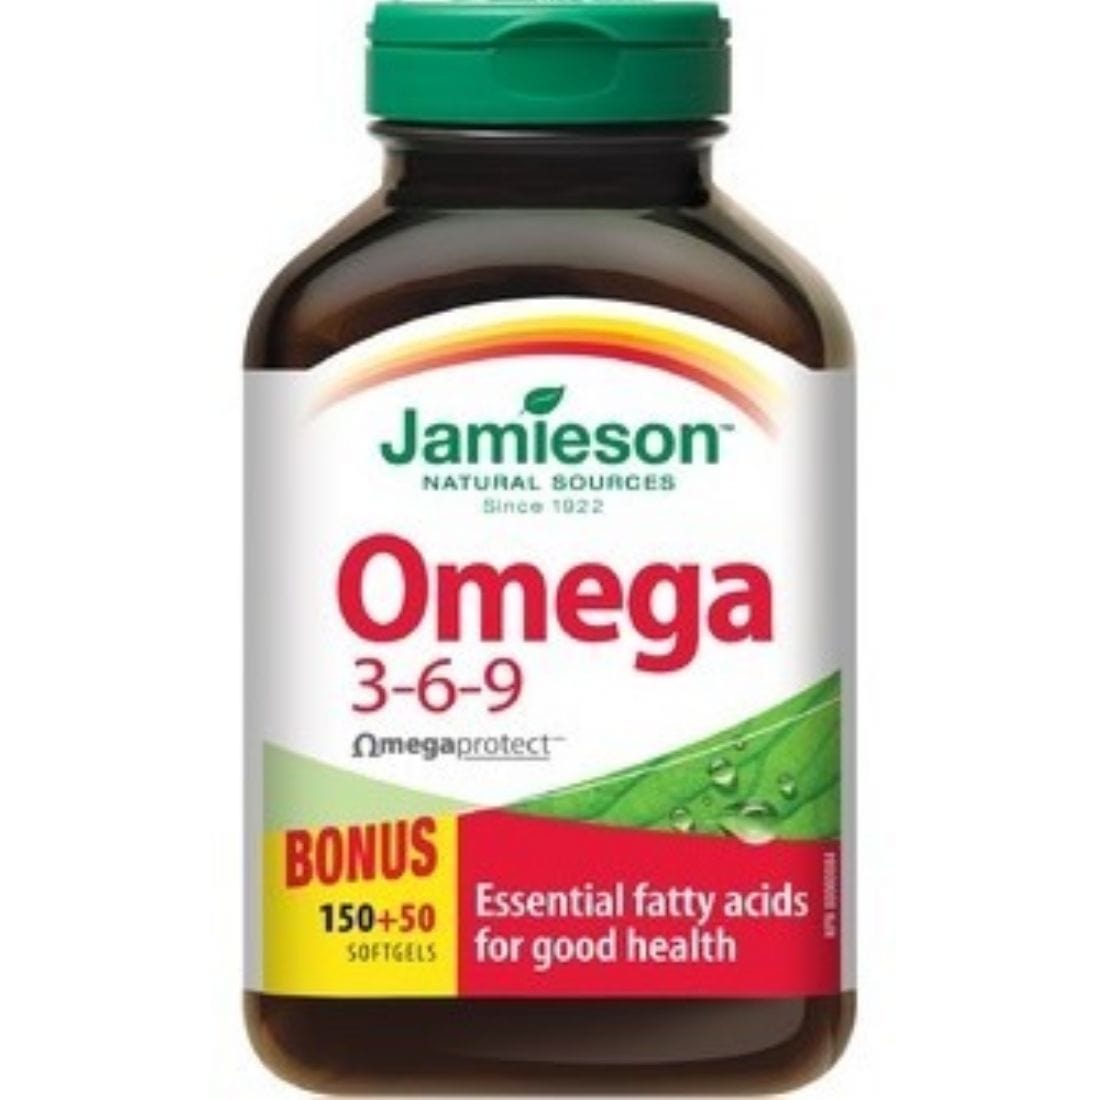 Jamieson Omega 3-6-9, 1200mg, 150+50 Free Softgels